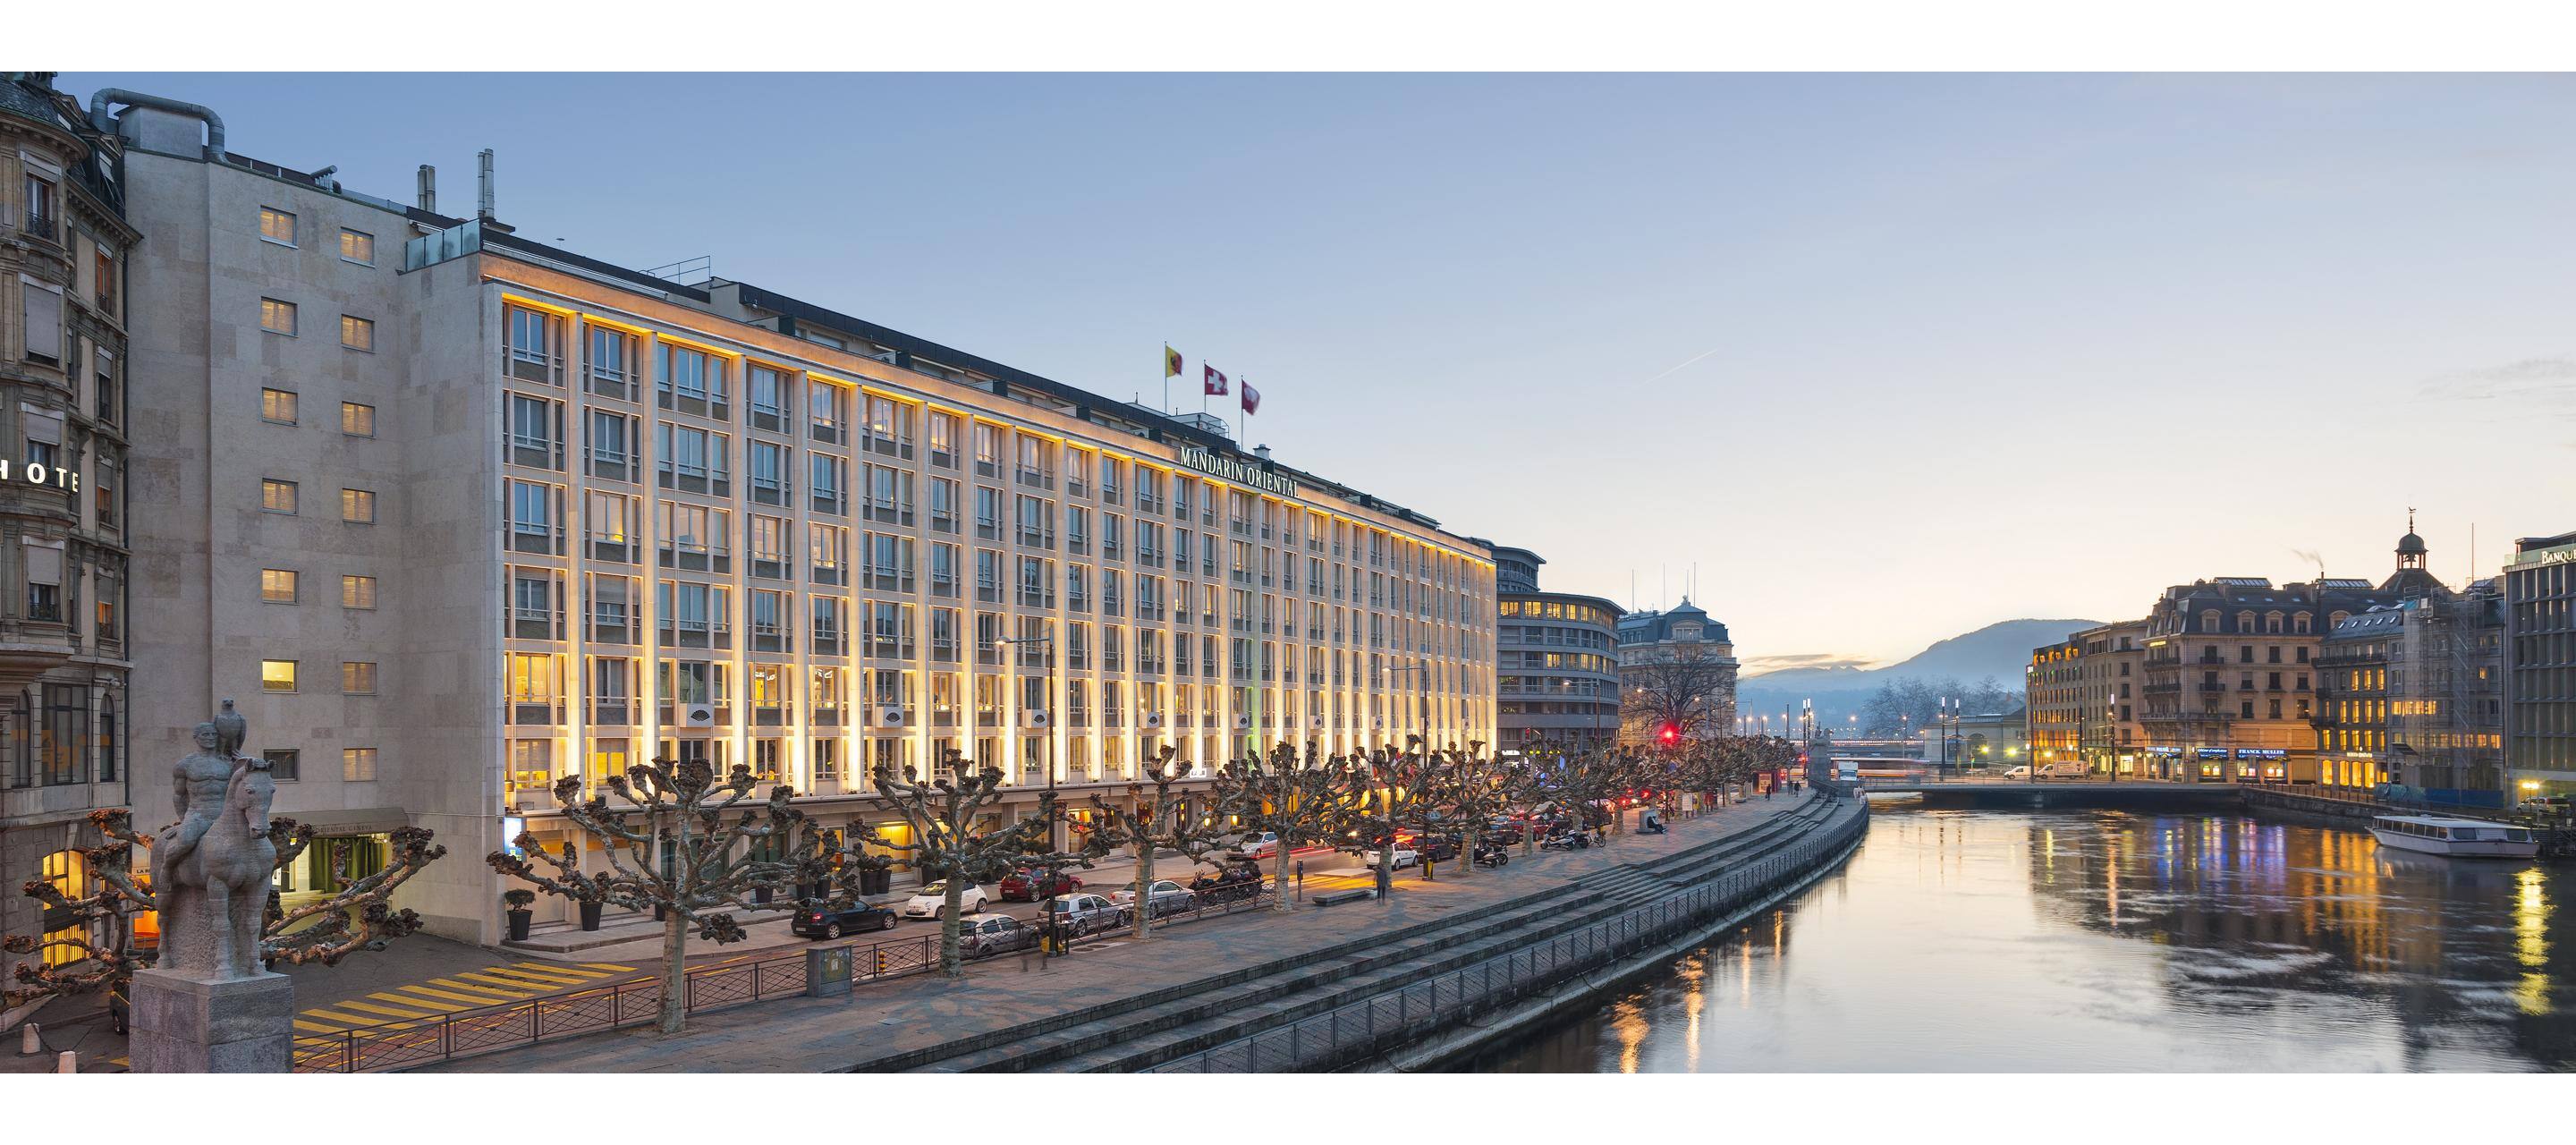 Luxury 5 Star Hotel | Rhone River | Mandarin Oriental, Geneva